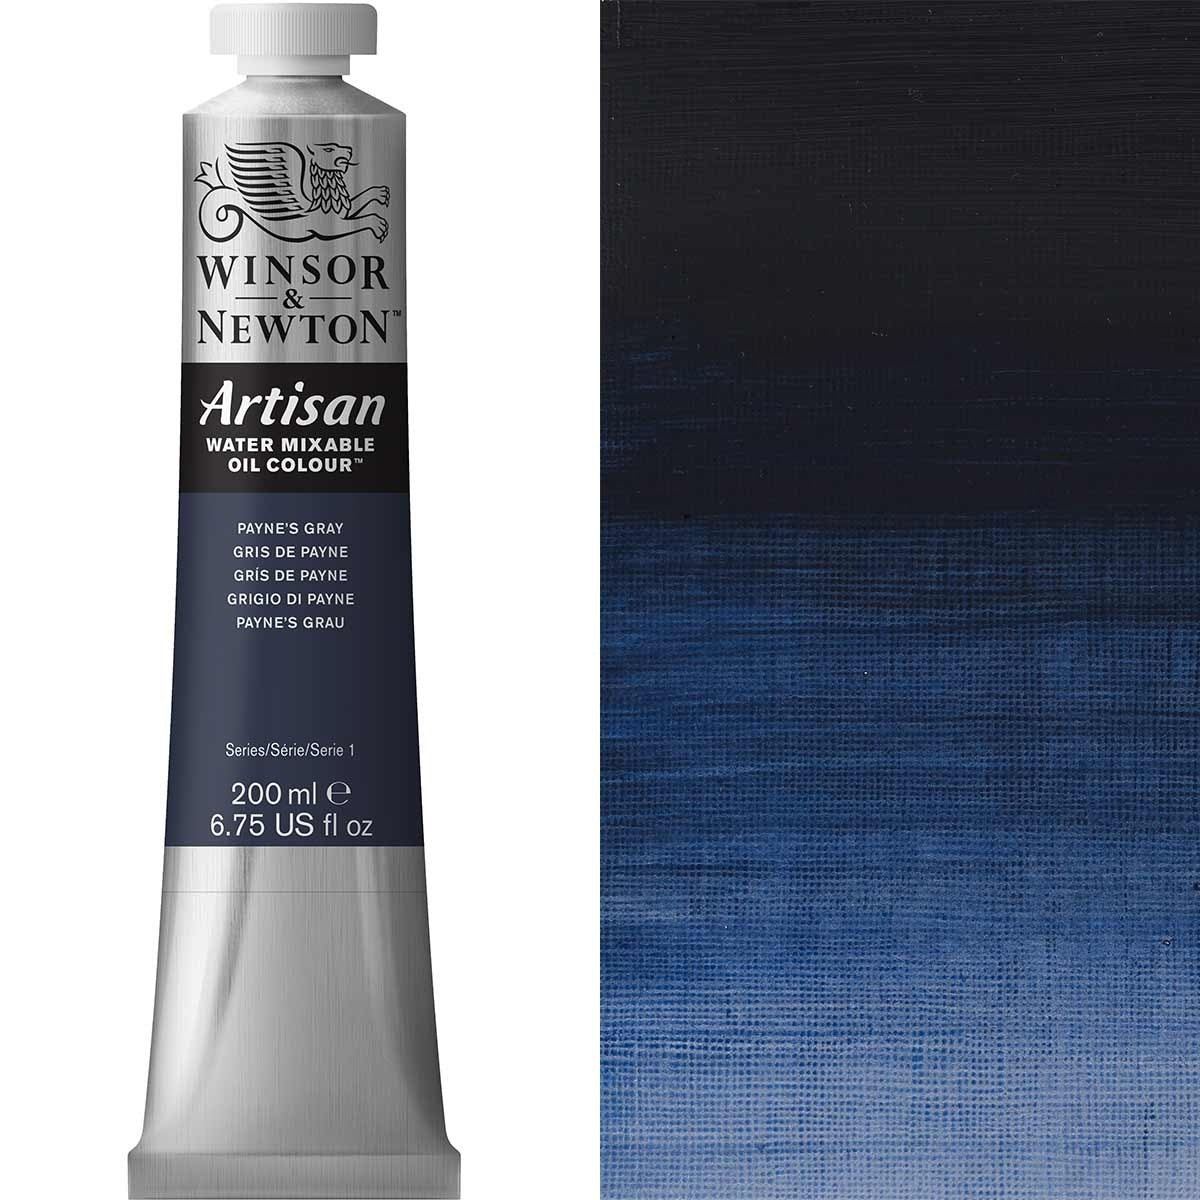 Winsor and Newton - Artisan Oil Colour Watermixable - 200ml - Paynes Grey